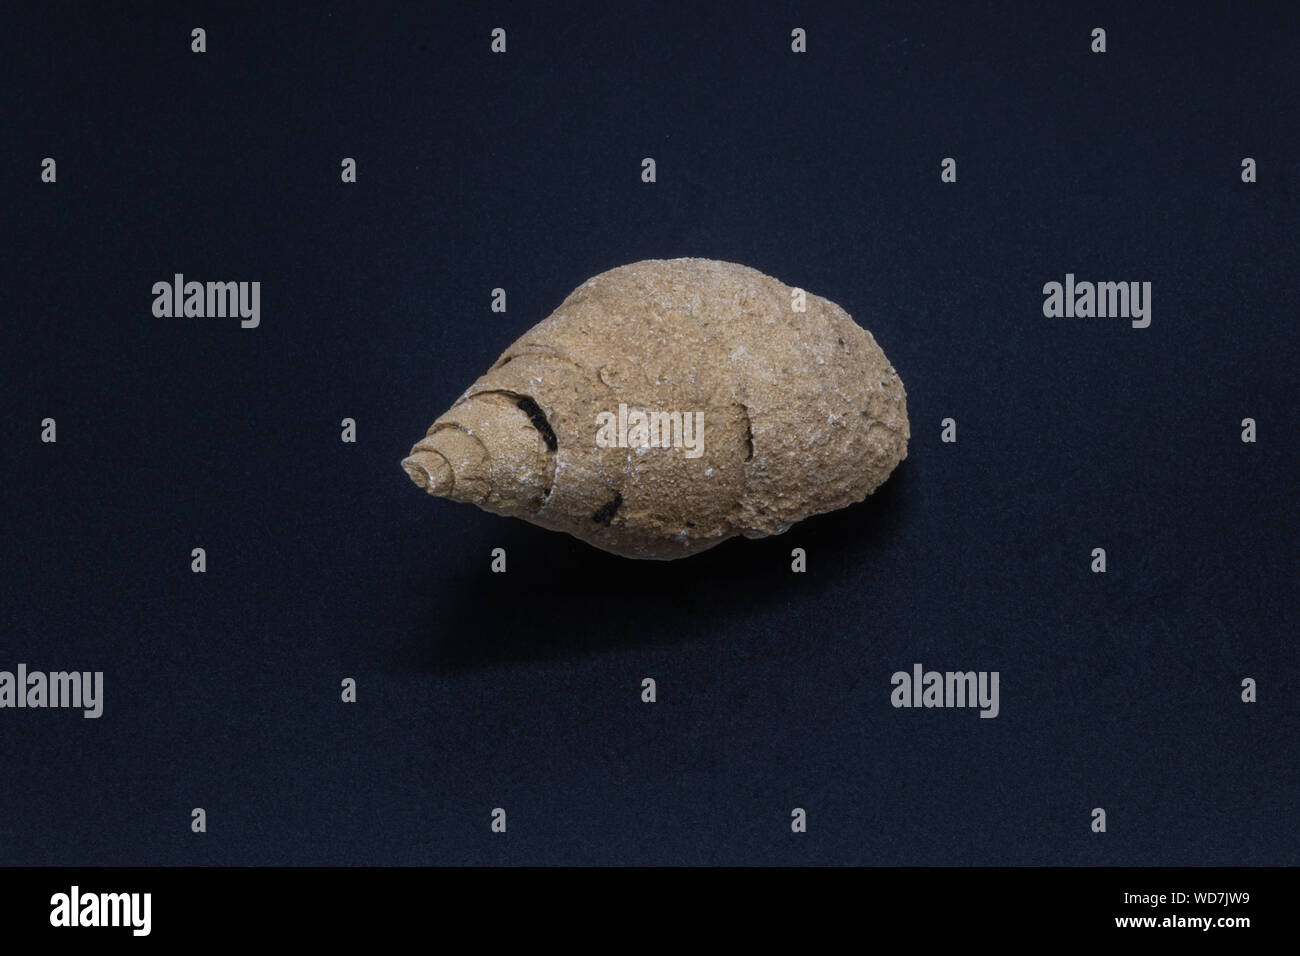 Fossil shell of a sea snail from Cenozoic sedimentary rocks of Saudi Arabia on the black background Stock Photo